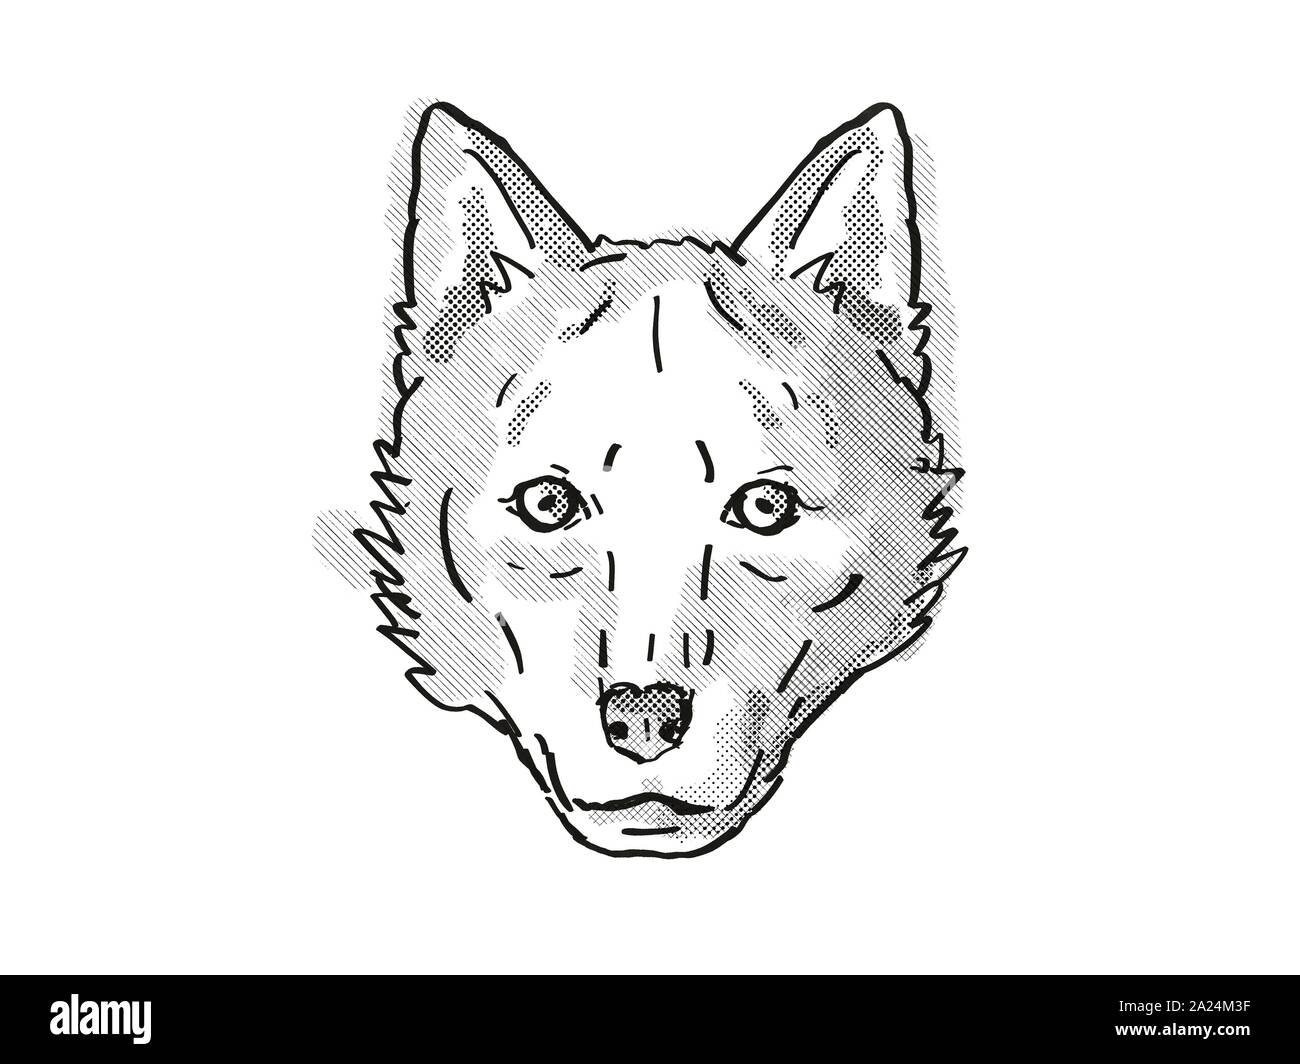 How To Draw A Cartoon Wolf Head